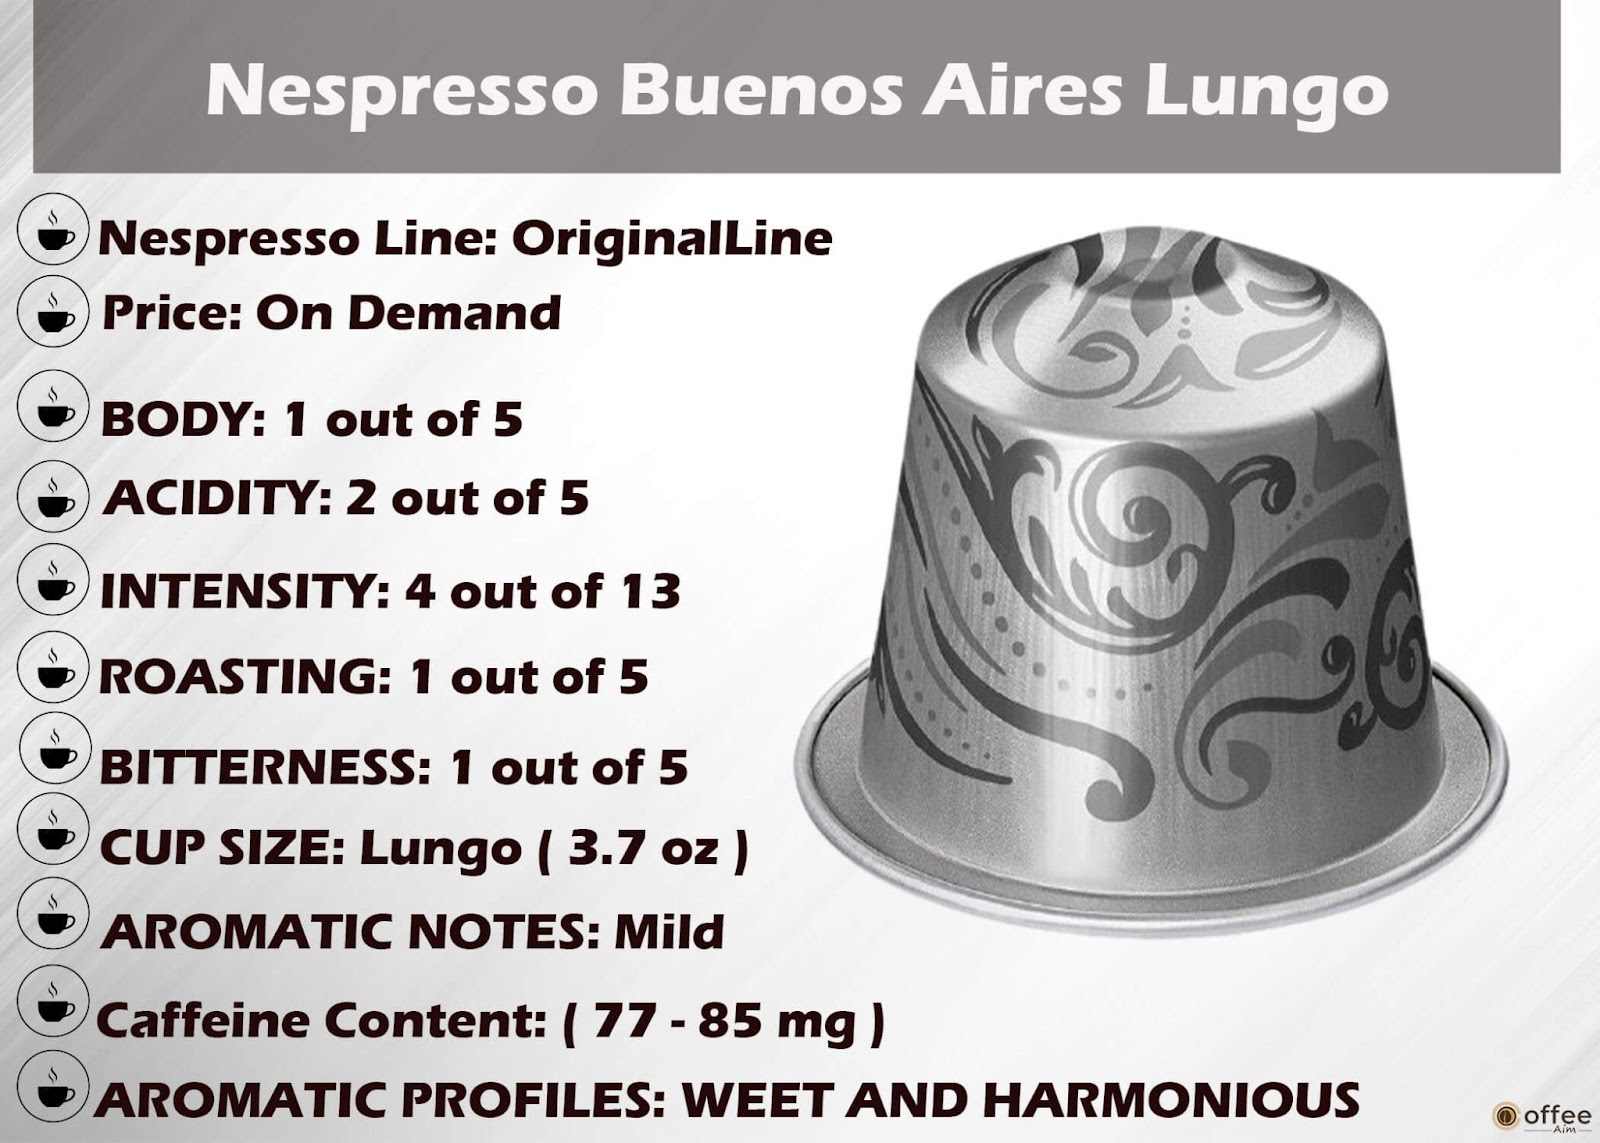 Features Chart of Nespresso Buenos Aires Lungo Original Line Capsule.